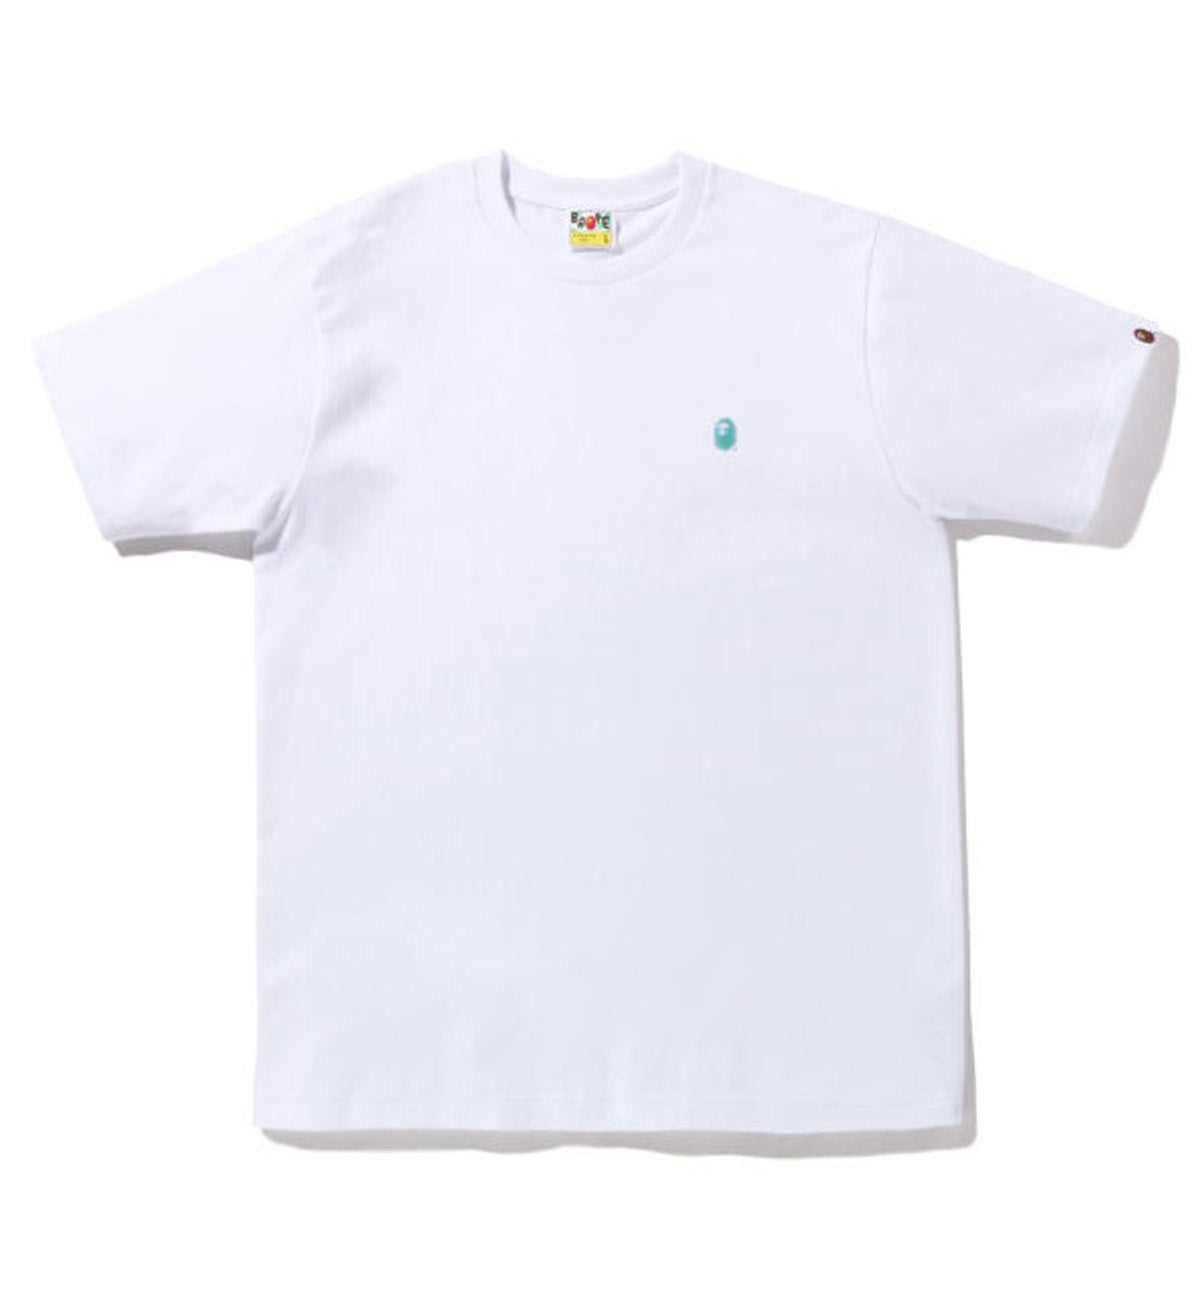 Bape Aqua Ape Head T-Shirt (White)